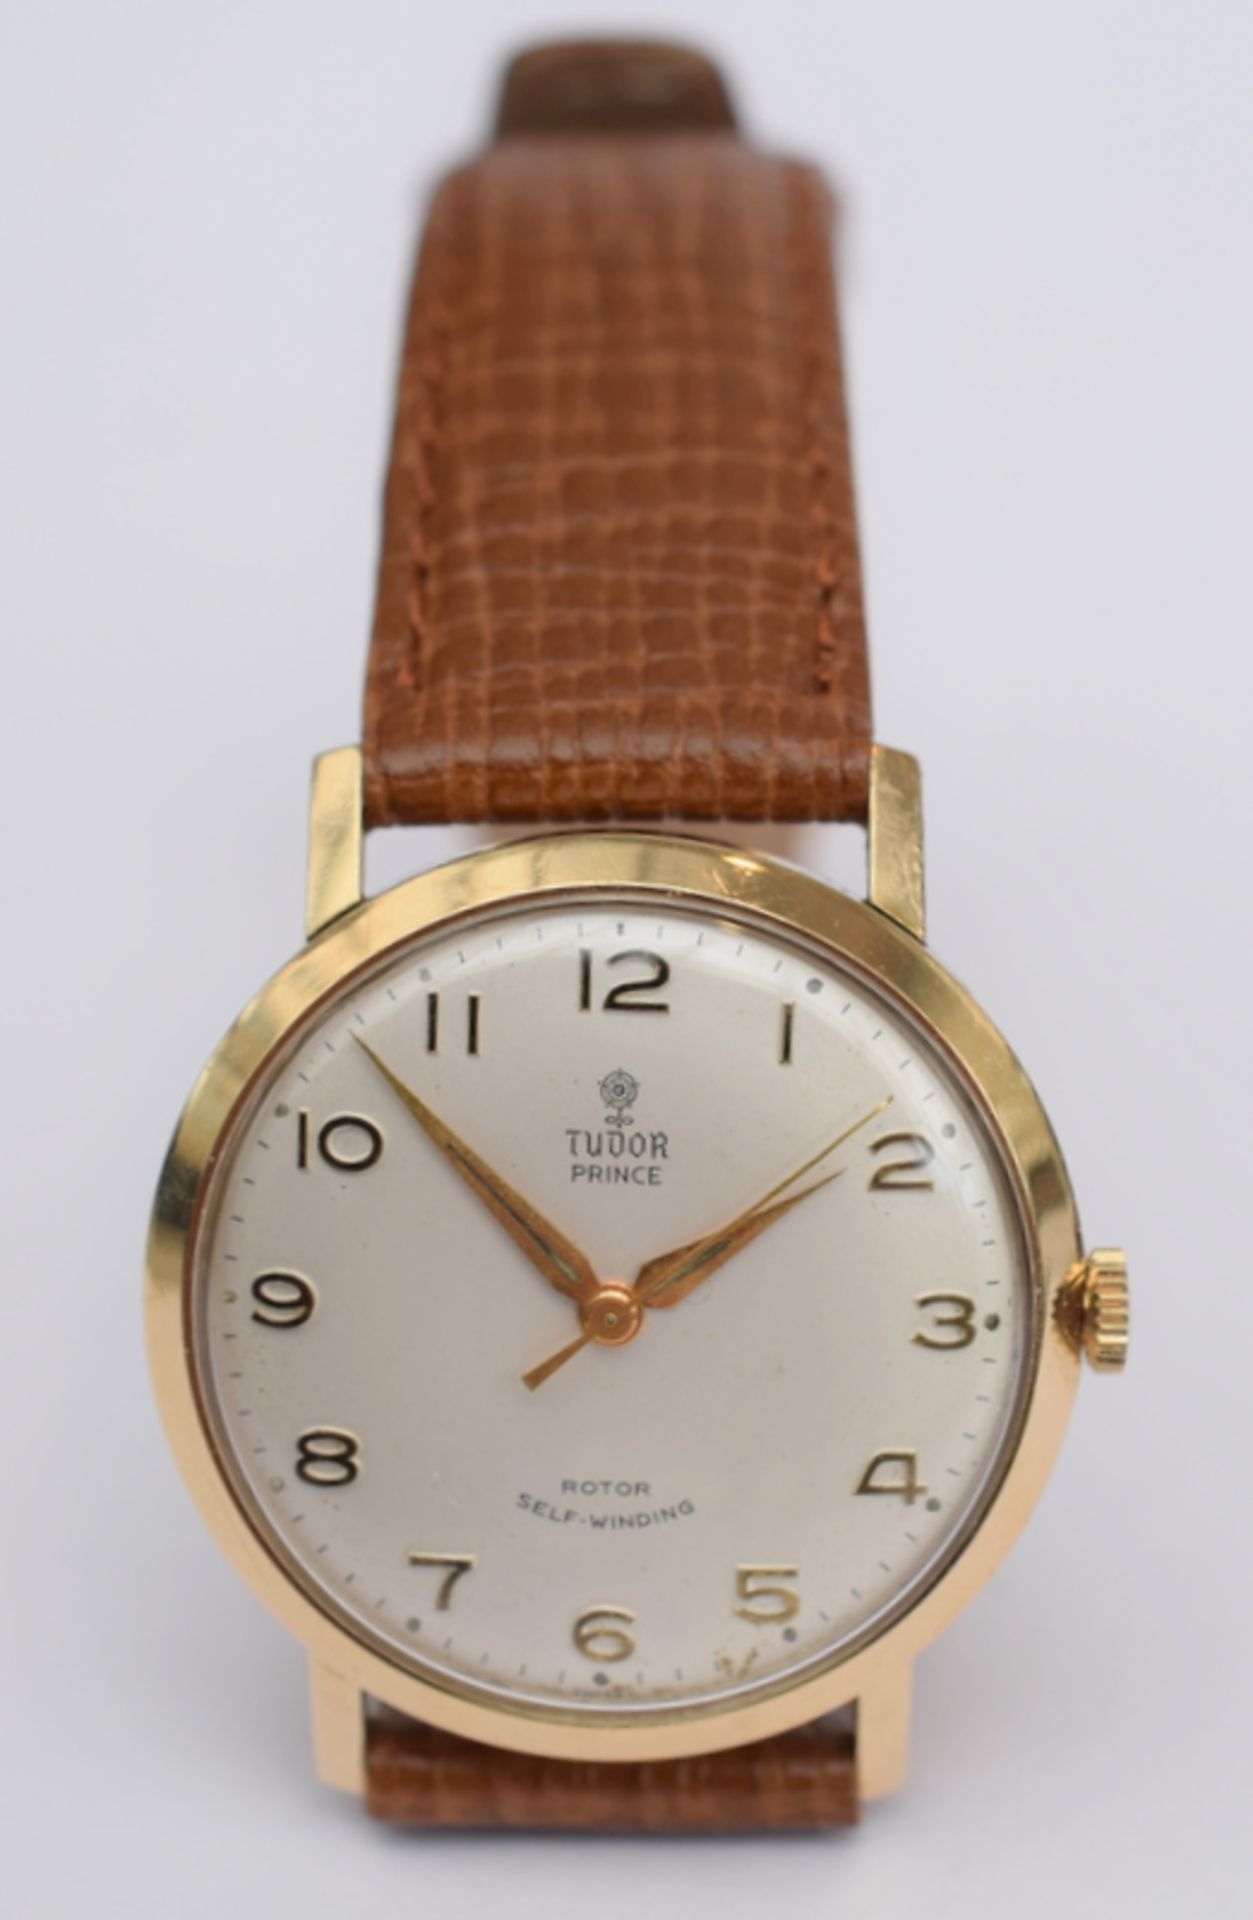 Rolex Tudor Prince 9ct Gold Watch